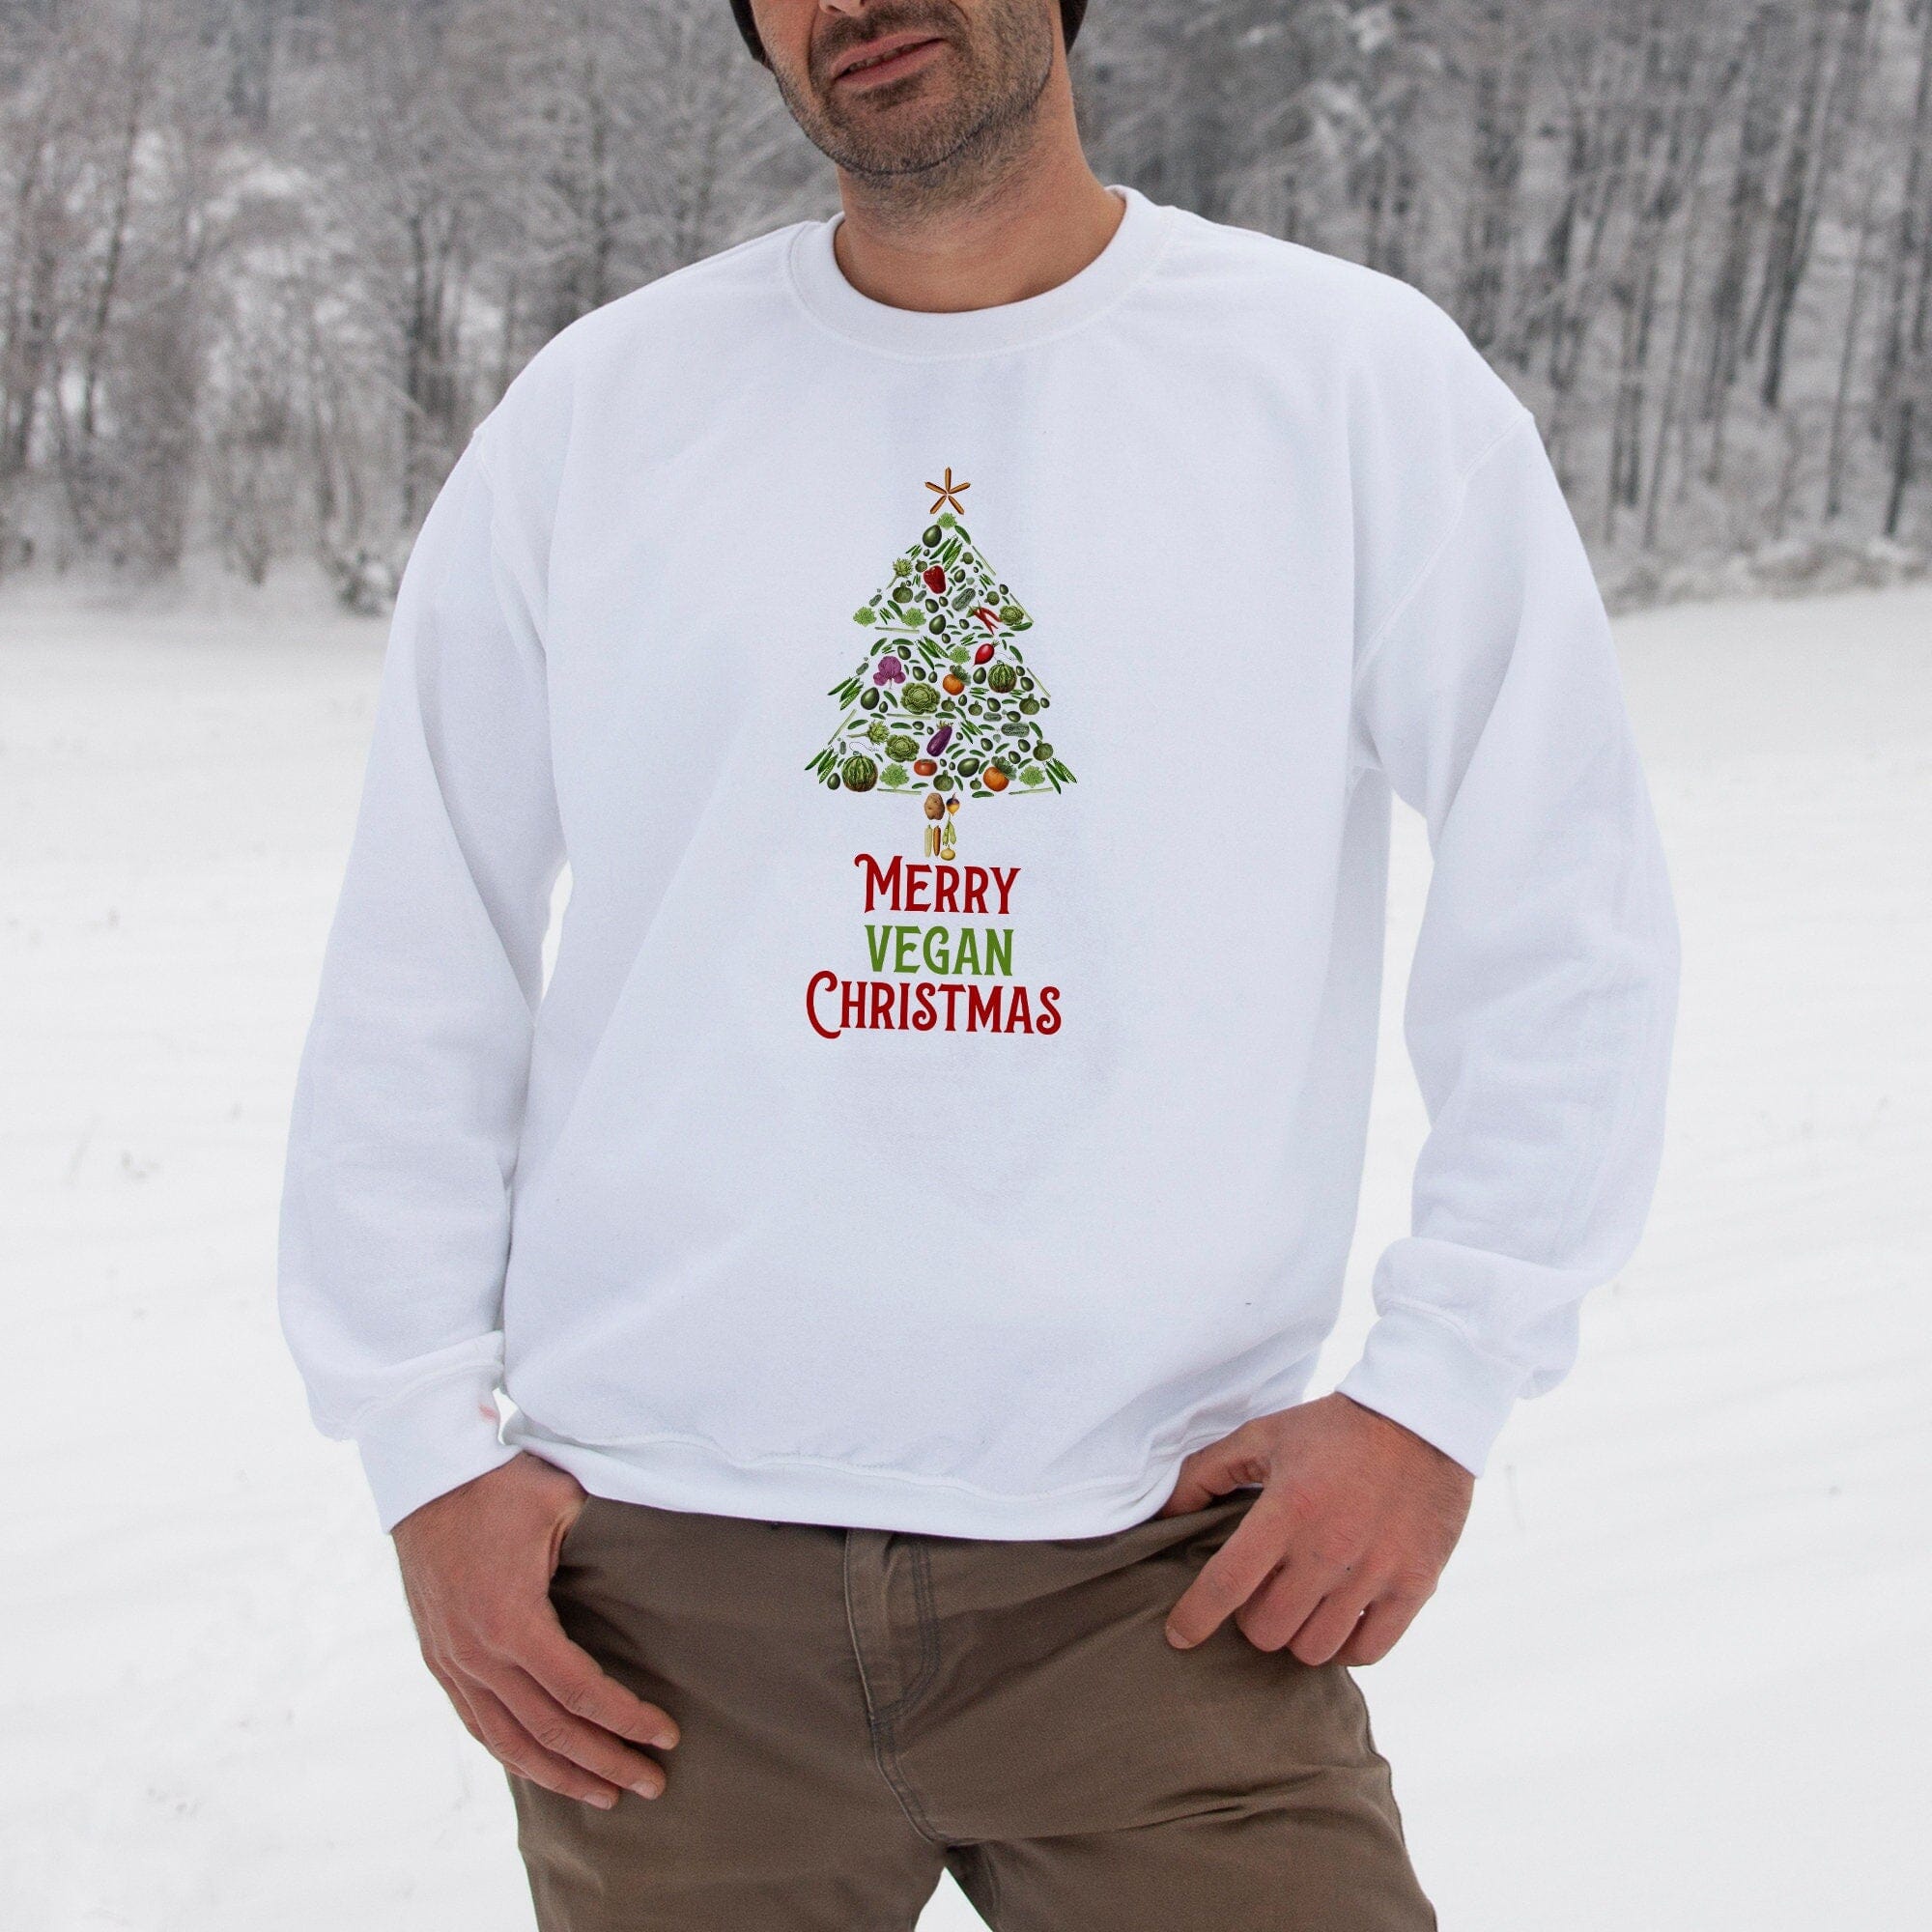 Merry Vegan Christmas Jumper, Unisex Adult Kids Sizes, Veg Veggie Vegetarian Xmas Sweatshirt